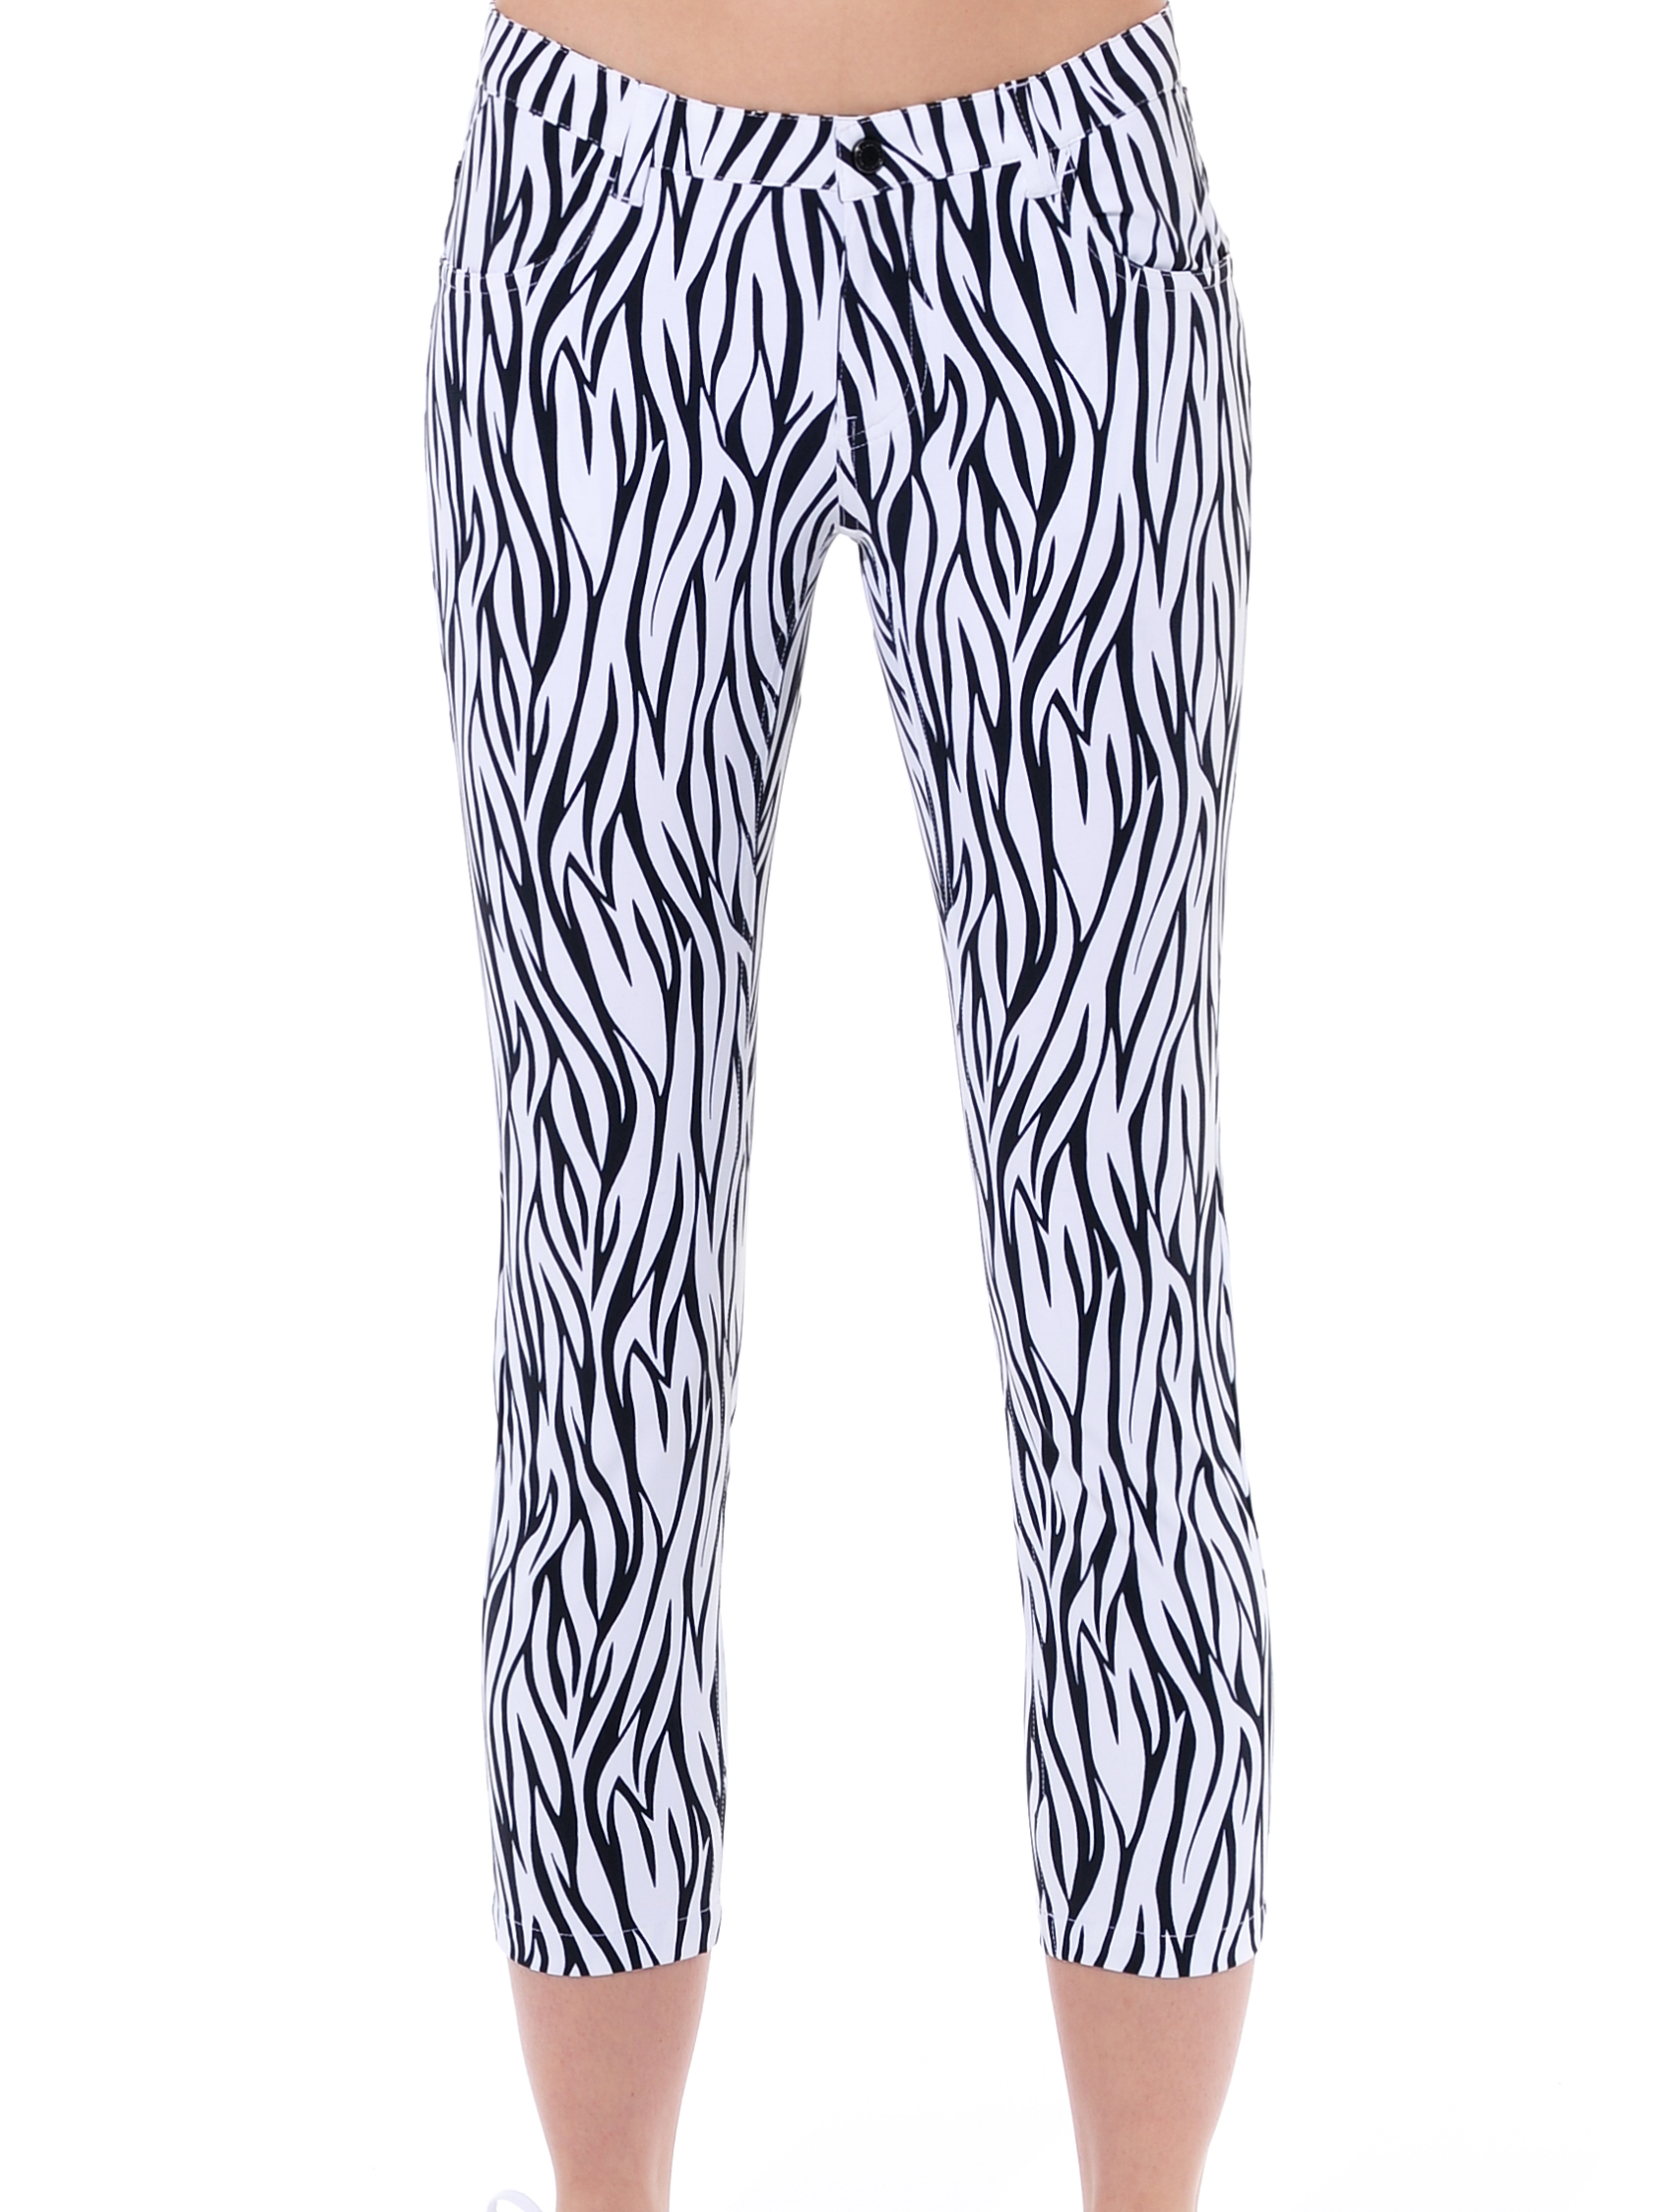 Zebra Skin Print Cropped 5pockets black/white